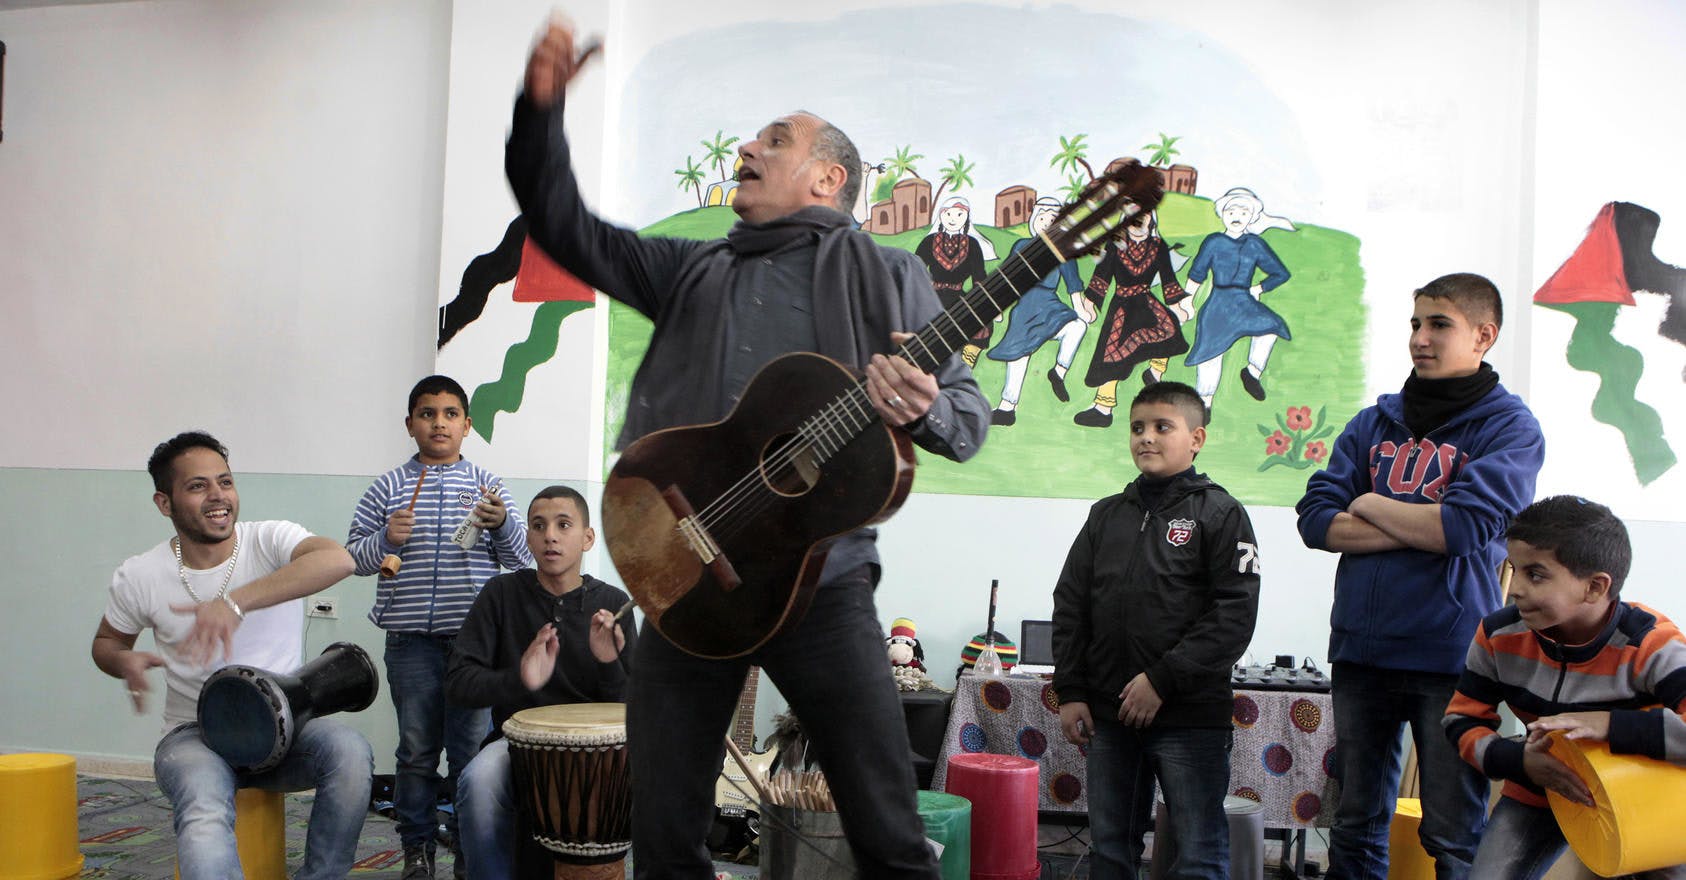 David Broza, an Israeli singer-songwriter, leads a workshop with Palestinian boys in the Shuafat neighborhood of East Jerusalem.